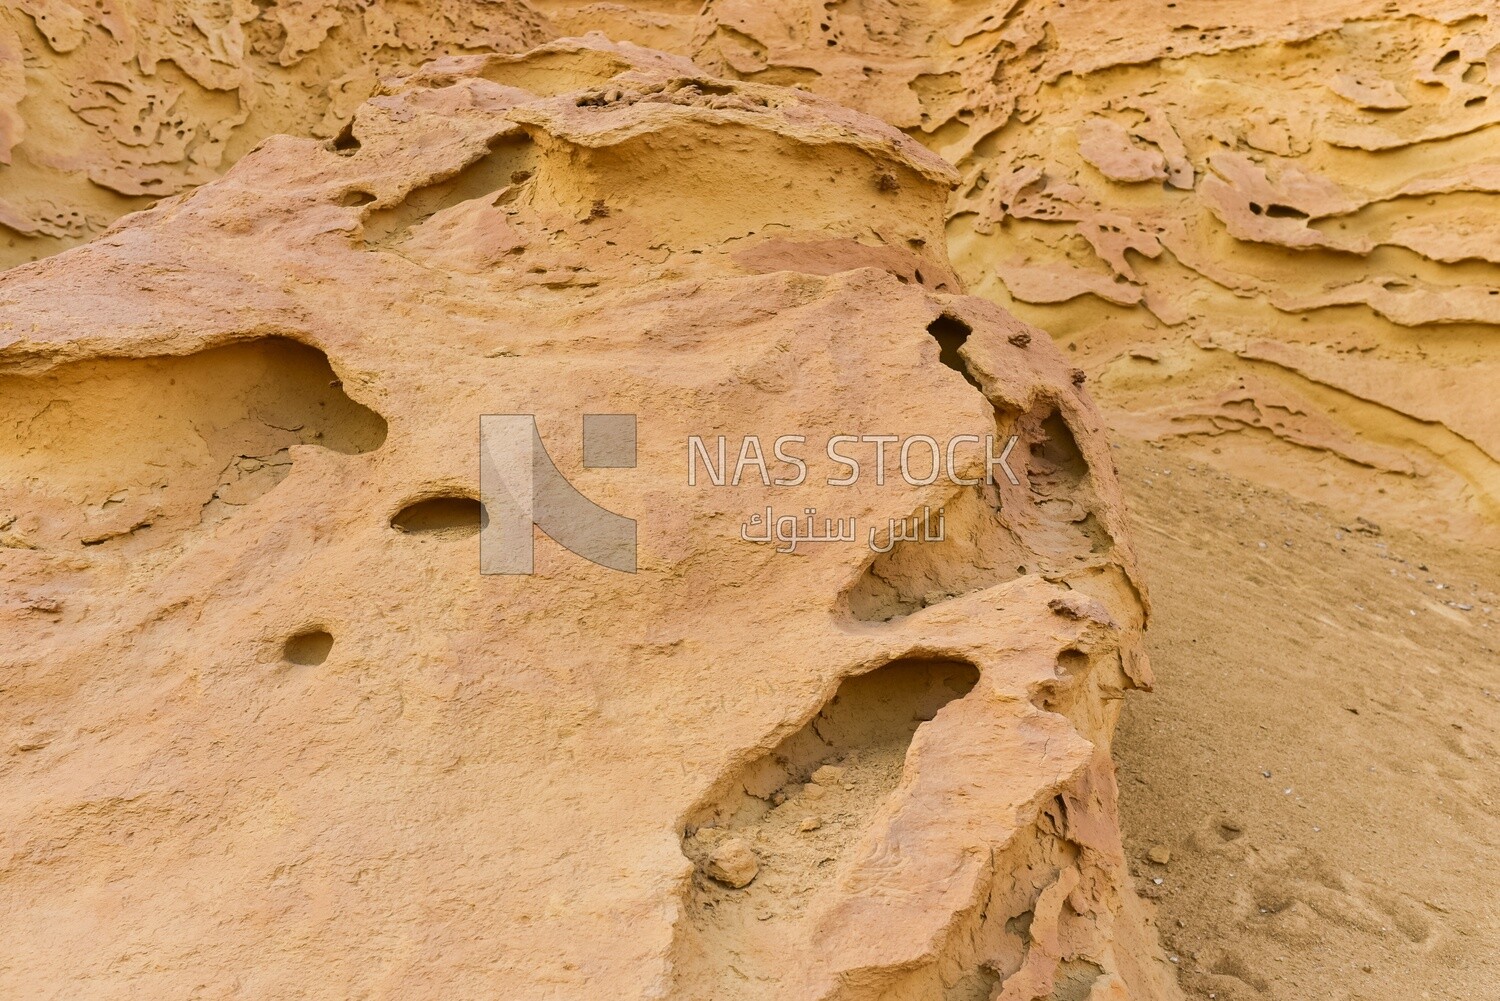 Scene of excavations inside the sandstones of Wadi El Hitan in Egypt